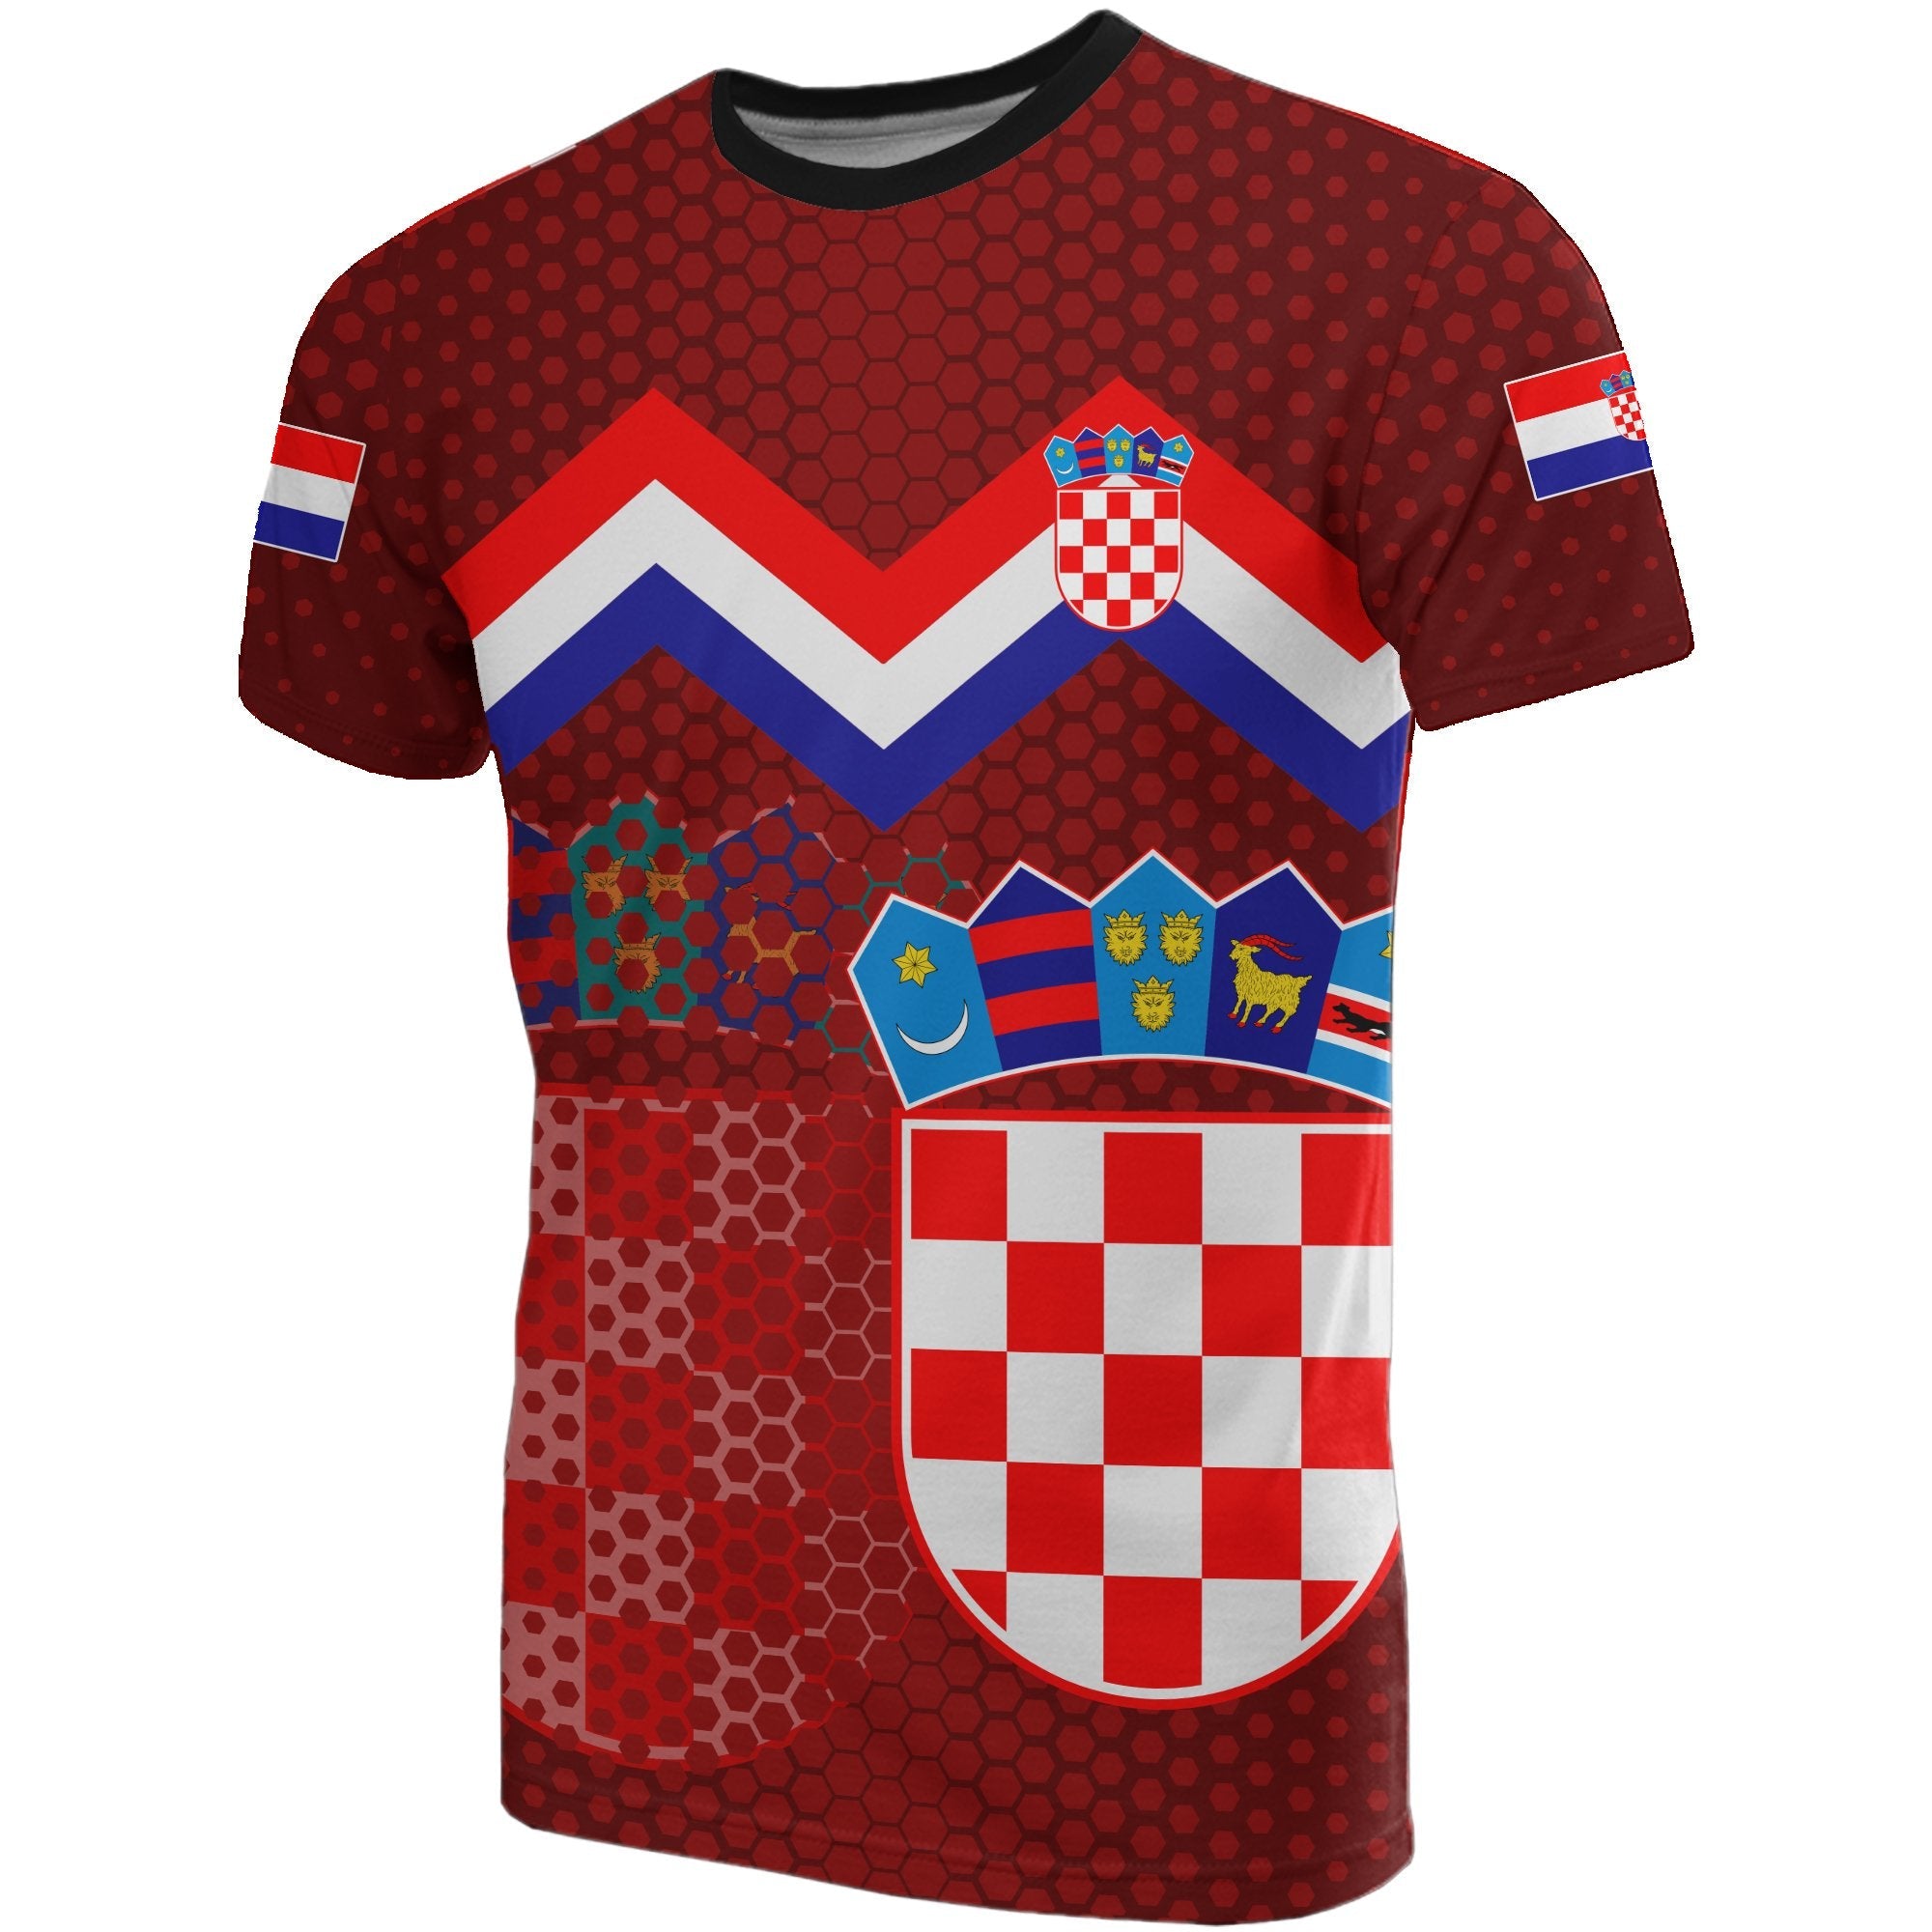 hrvatska-croatia-coat-of-arms-t-shirt-red